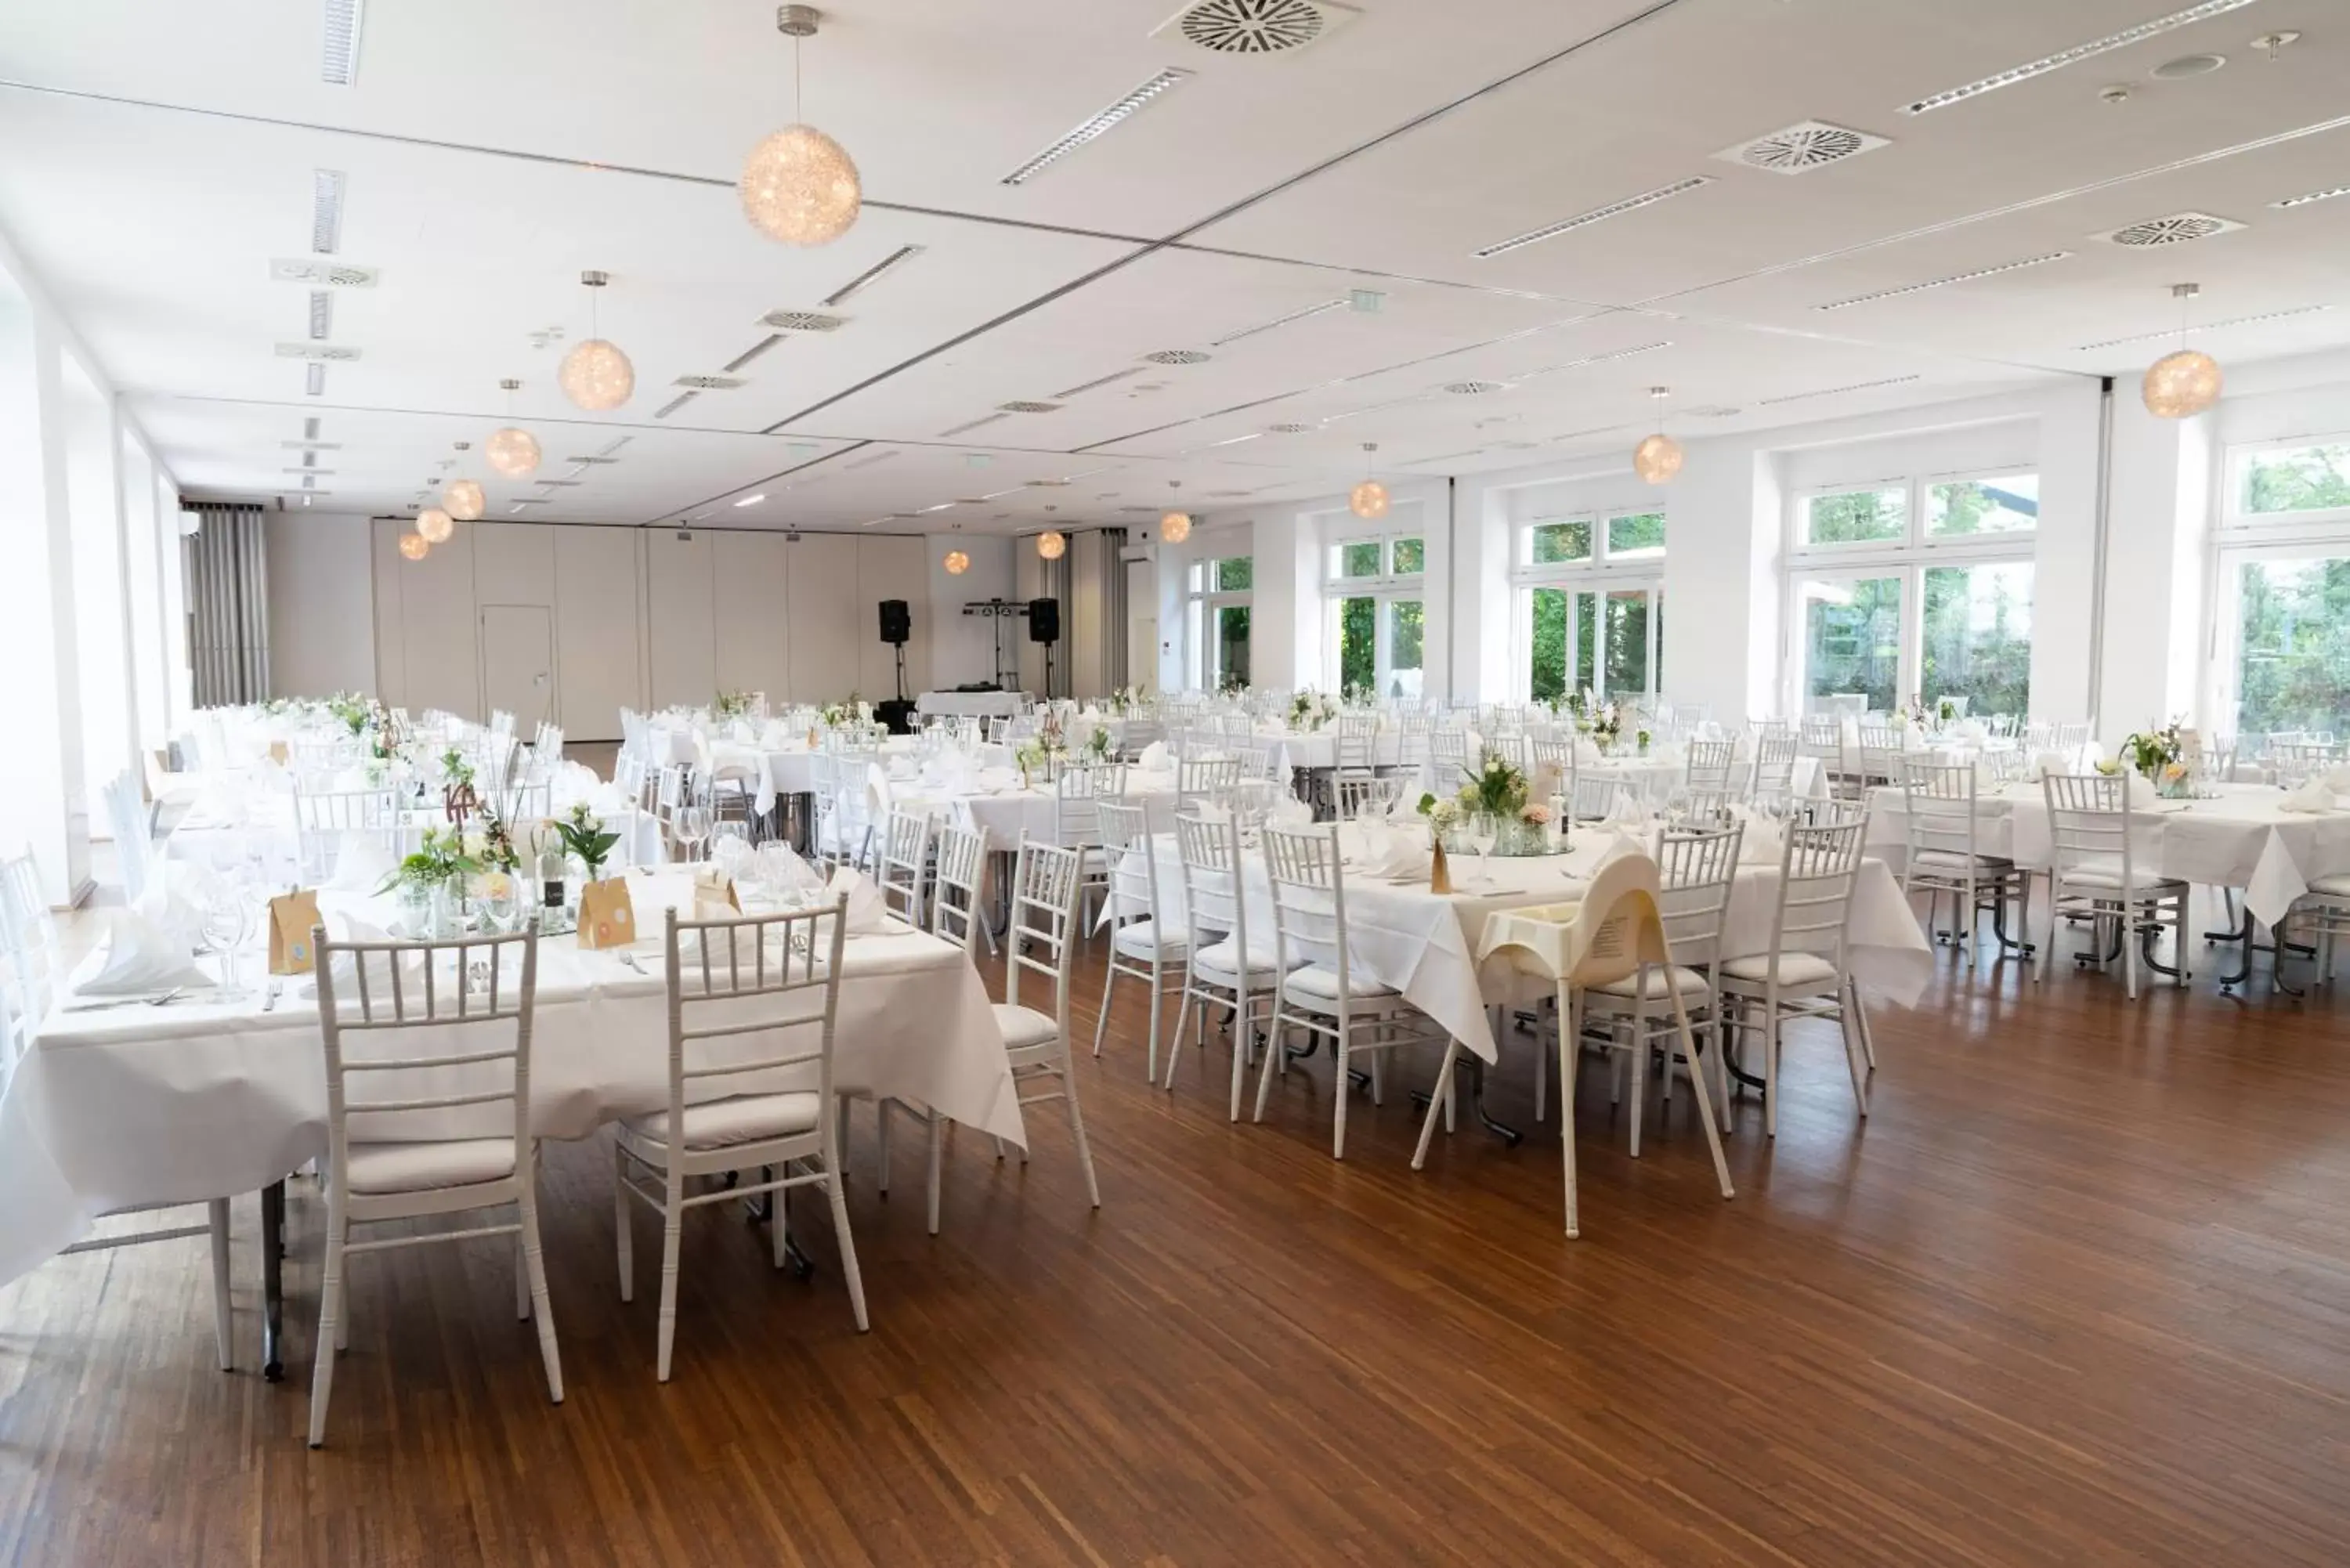 Banquet/Function facilities, Banquet Facilities in Albhotel Fortuna